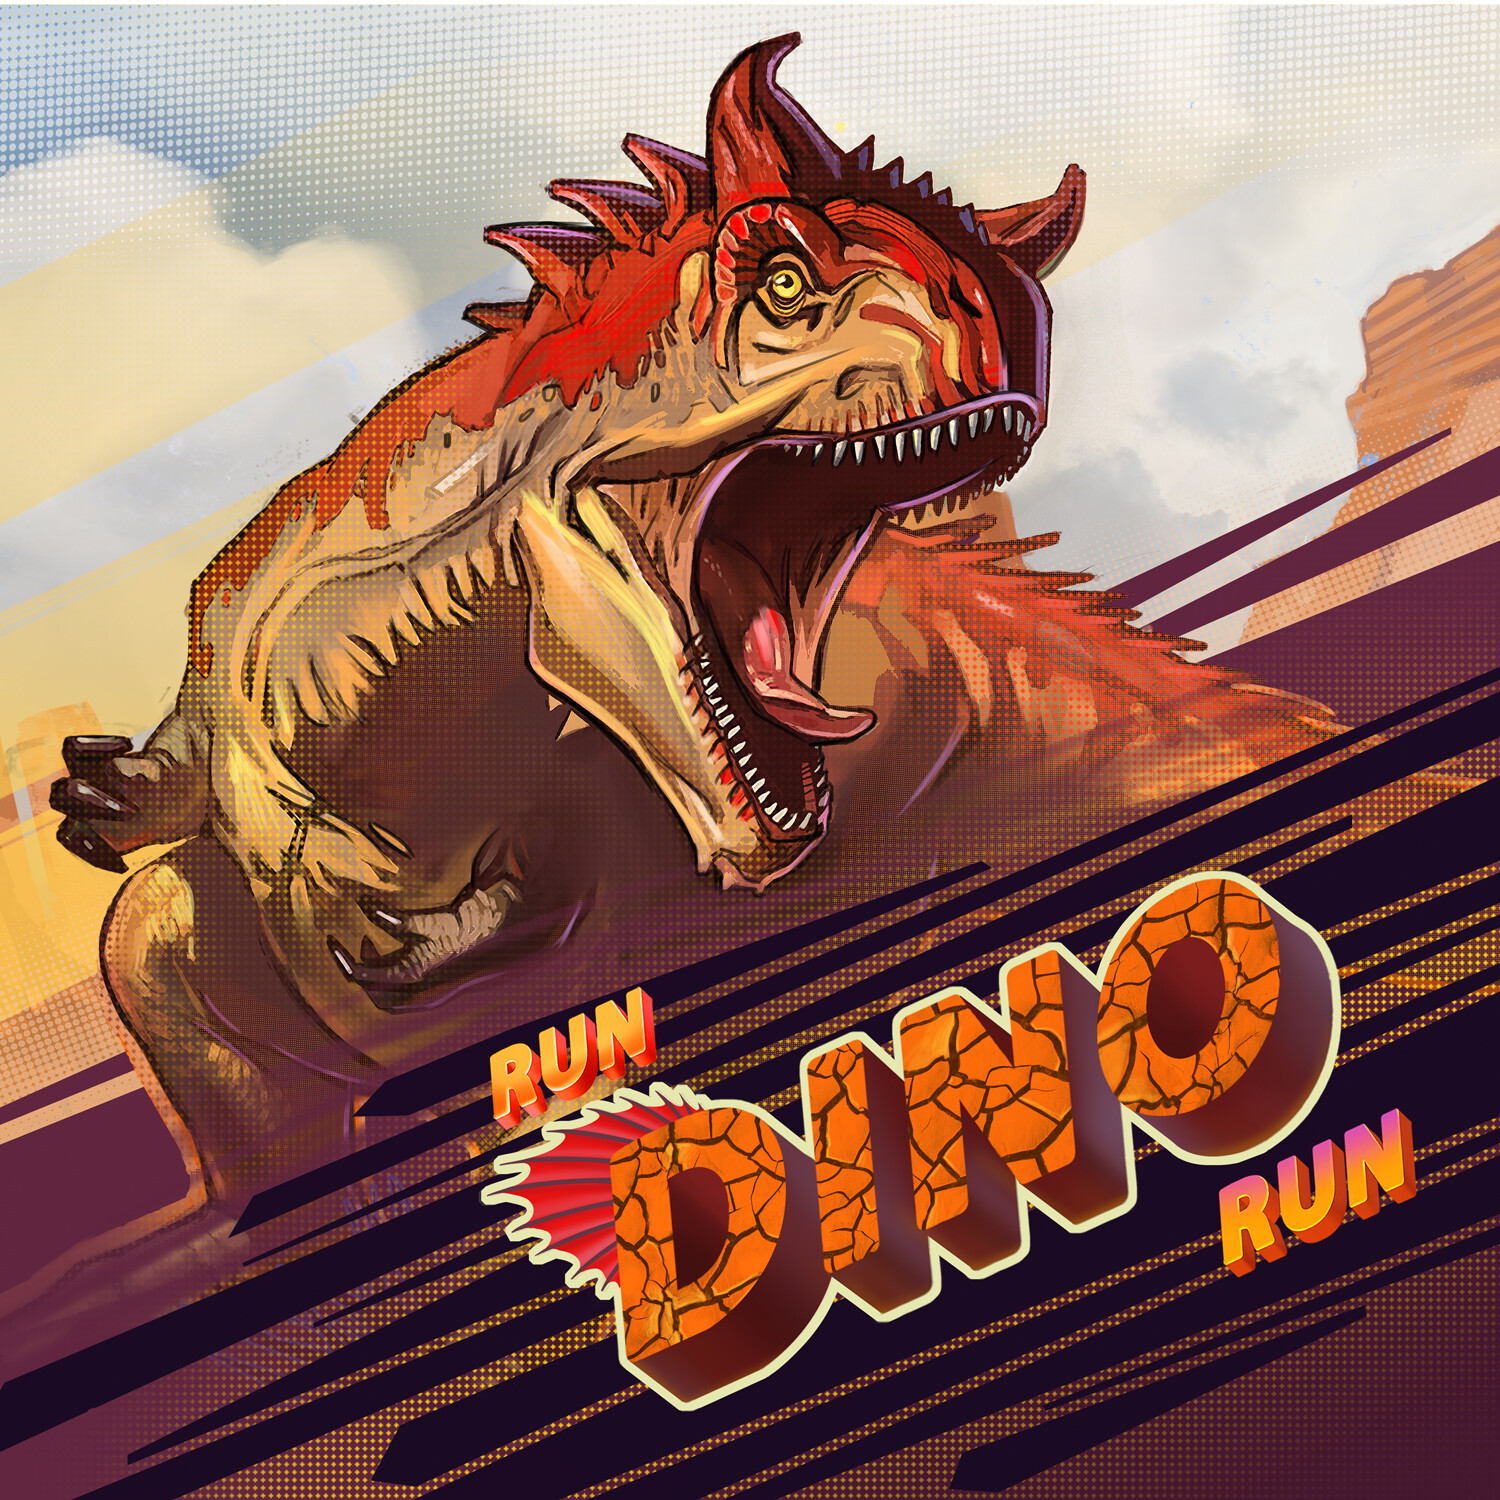 OWL Studio - Run Dino Run - Dinosaurs